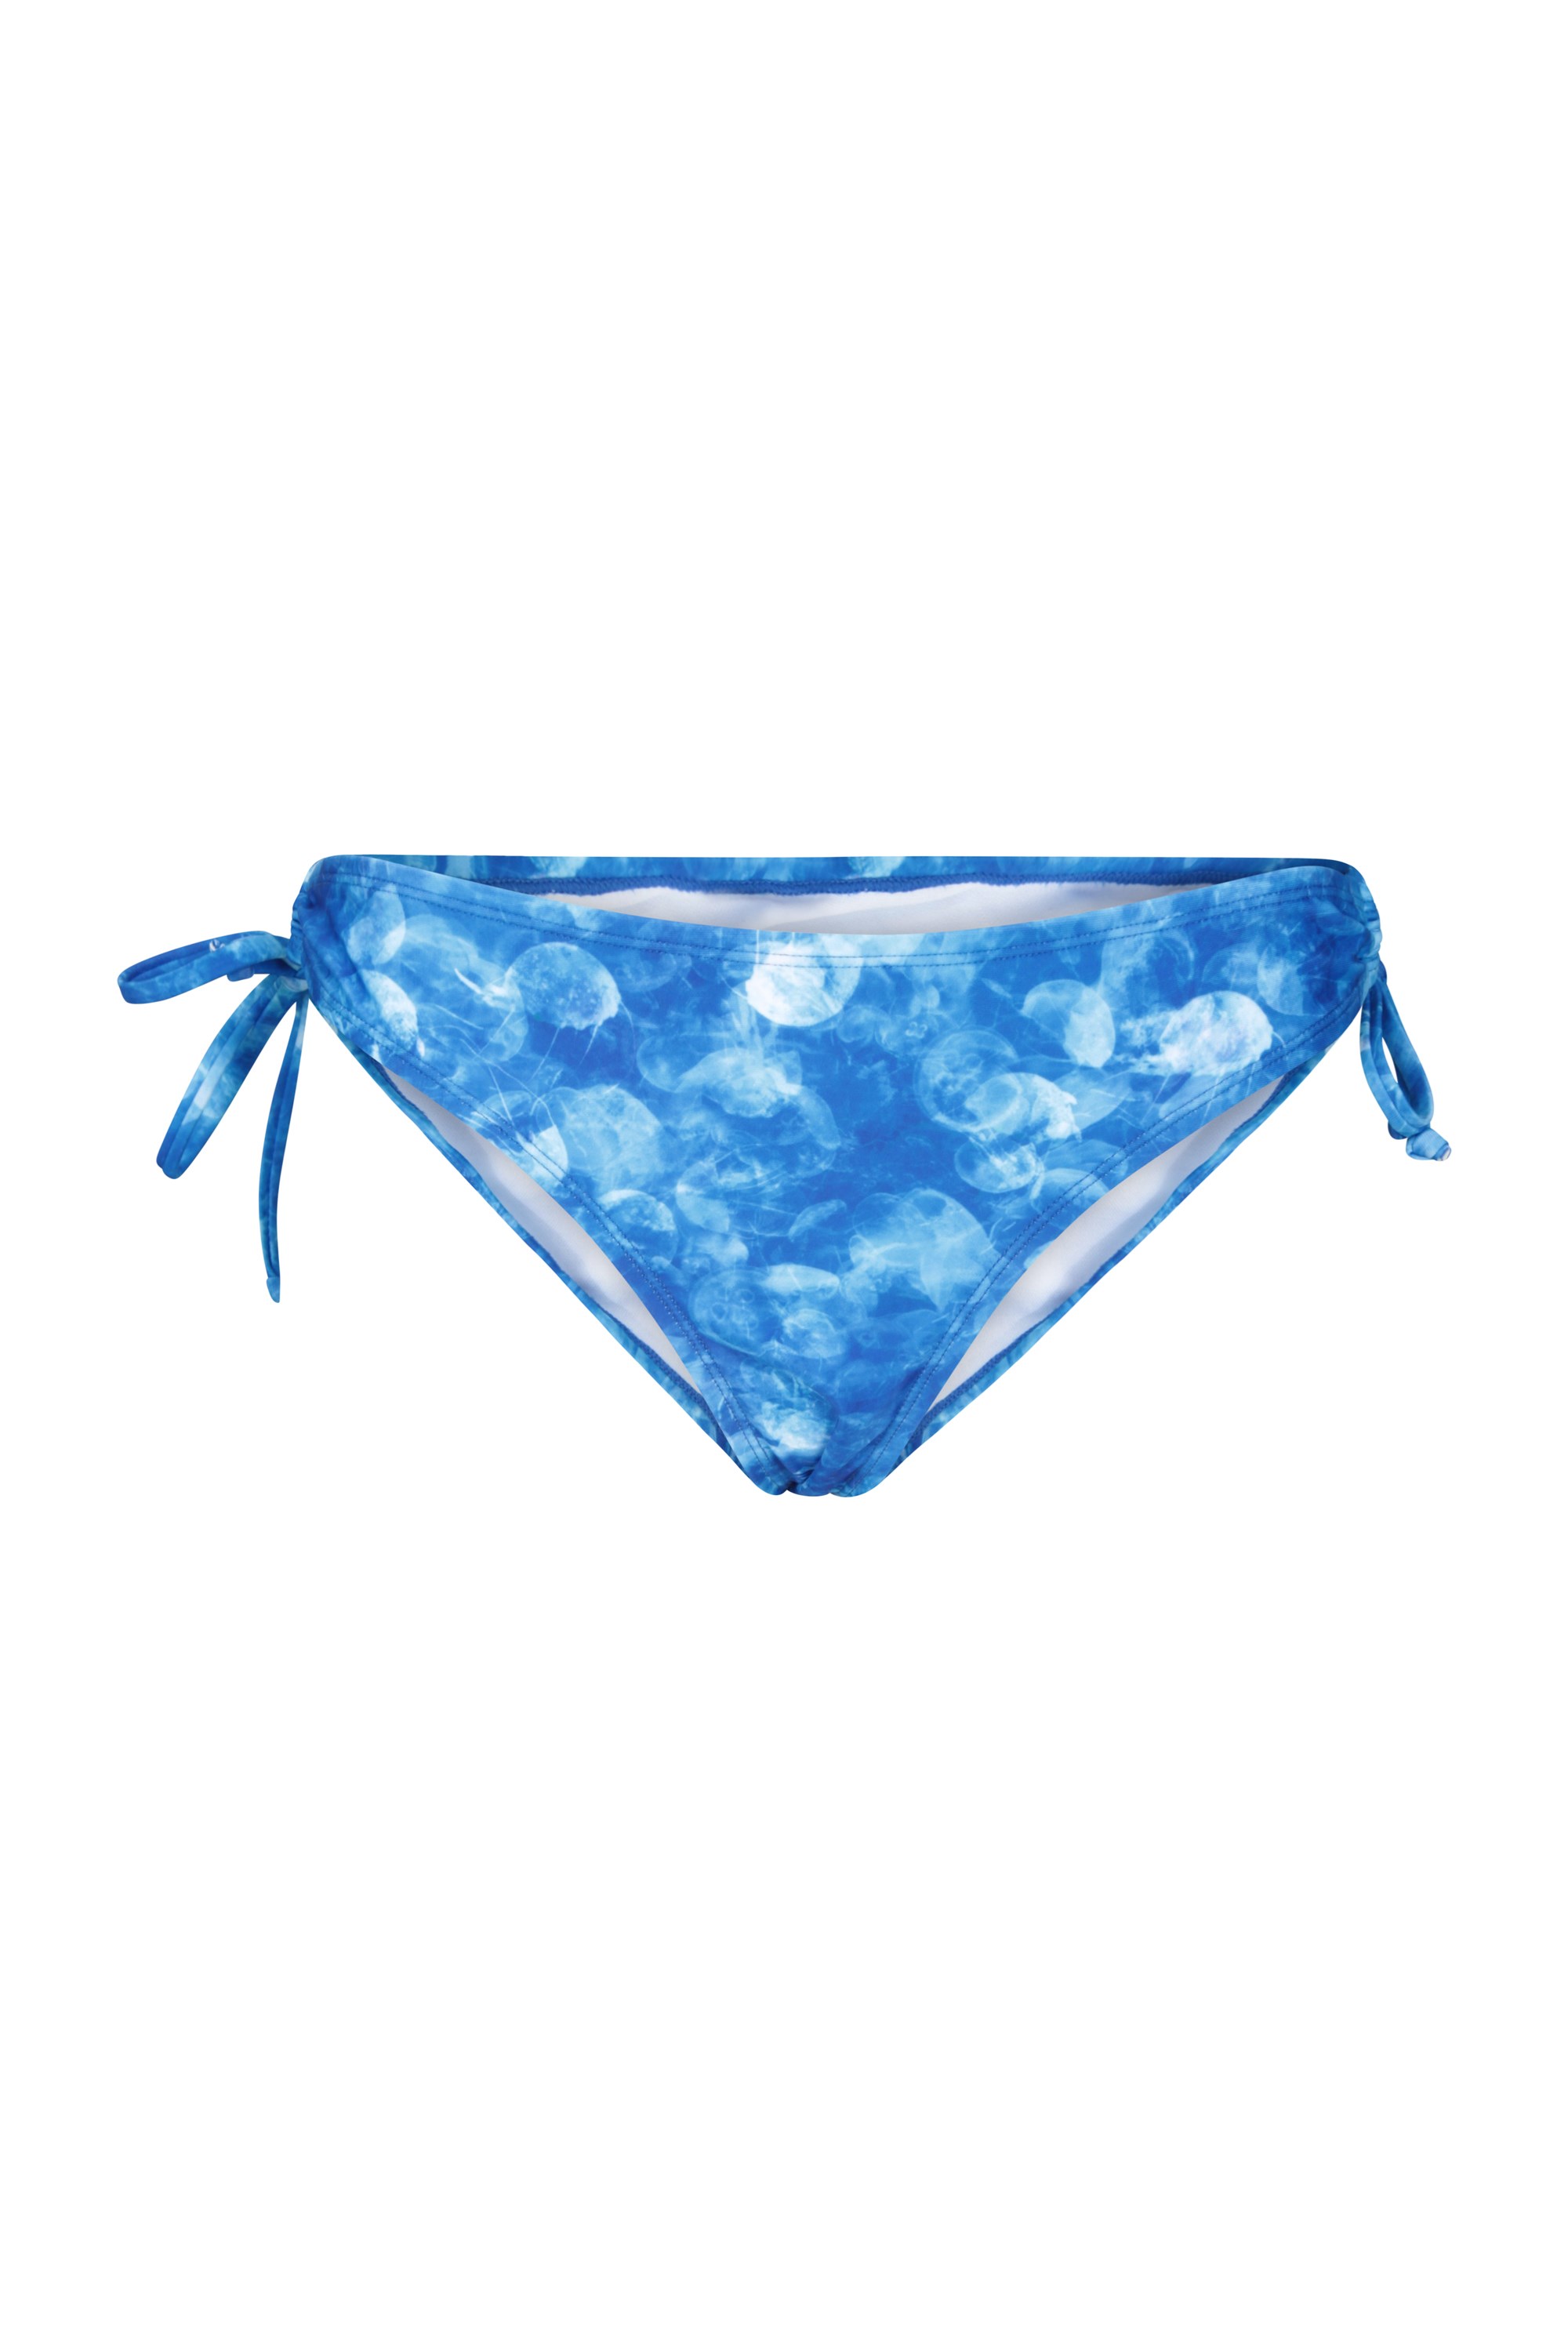 Mountain Warehouse South Beach Womens Bikini Bottoms Blue